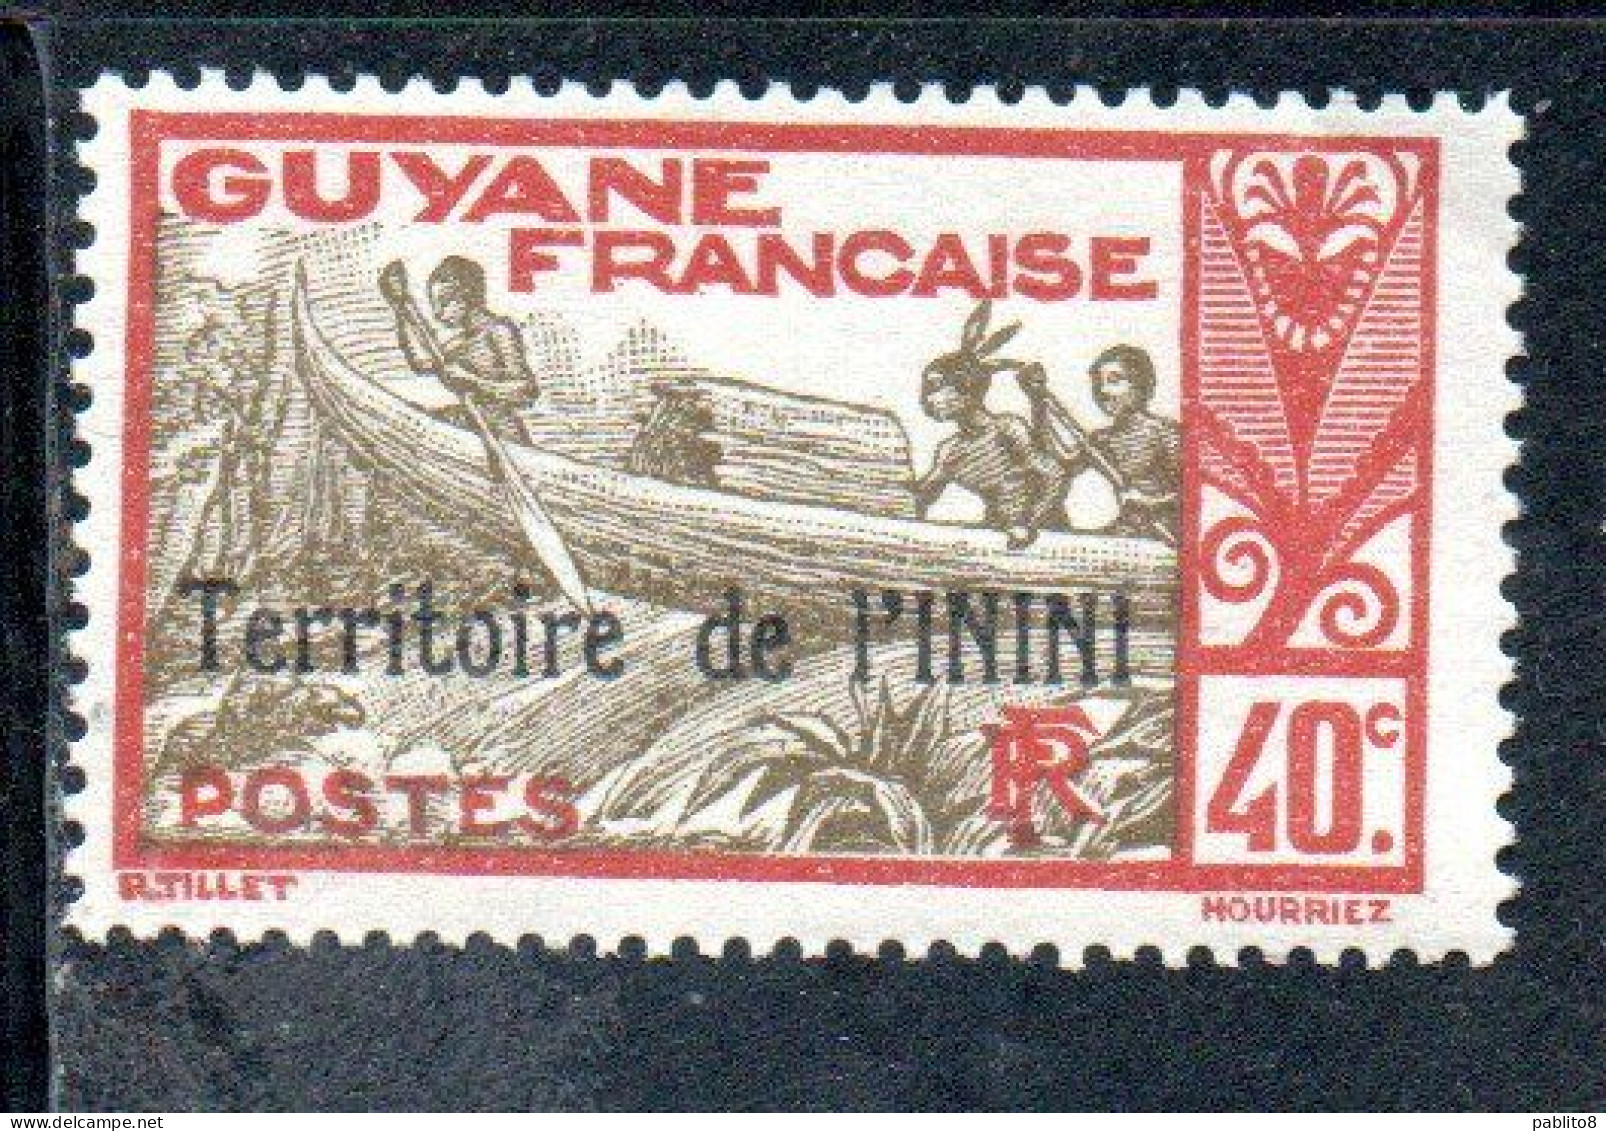 GUYANE FRANCAISE TERRITOIRE DE L'ININI OVERPRINTED SURCHARGE 1932 1940 SHOOTING RAPIDS MARONI RIVER 40c MNH - Unused Stamps